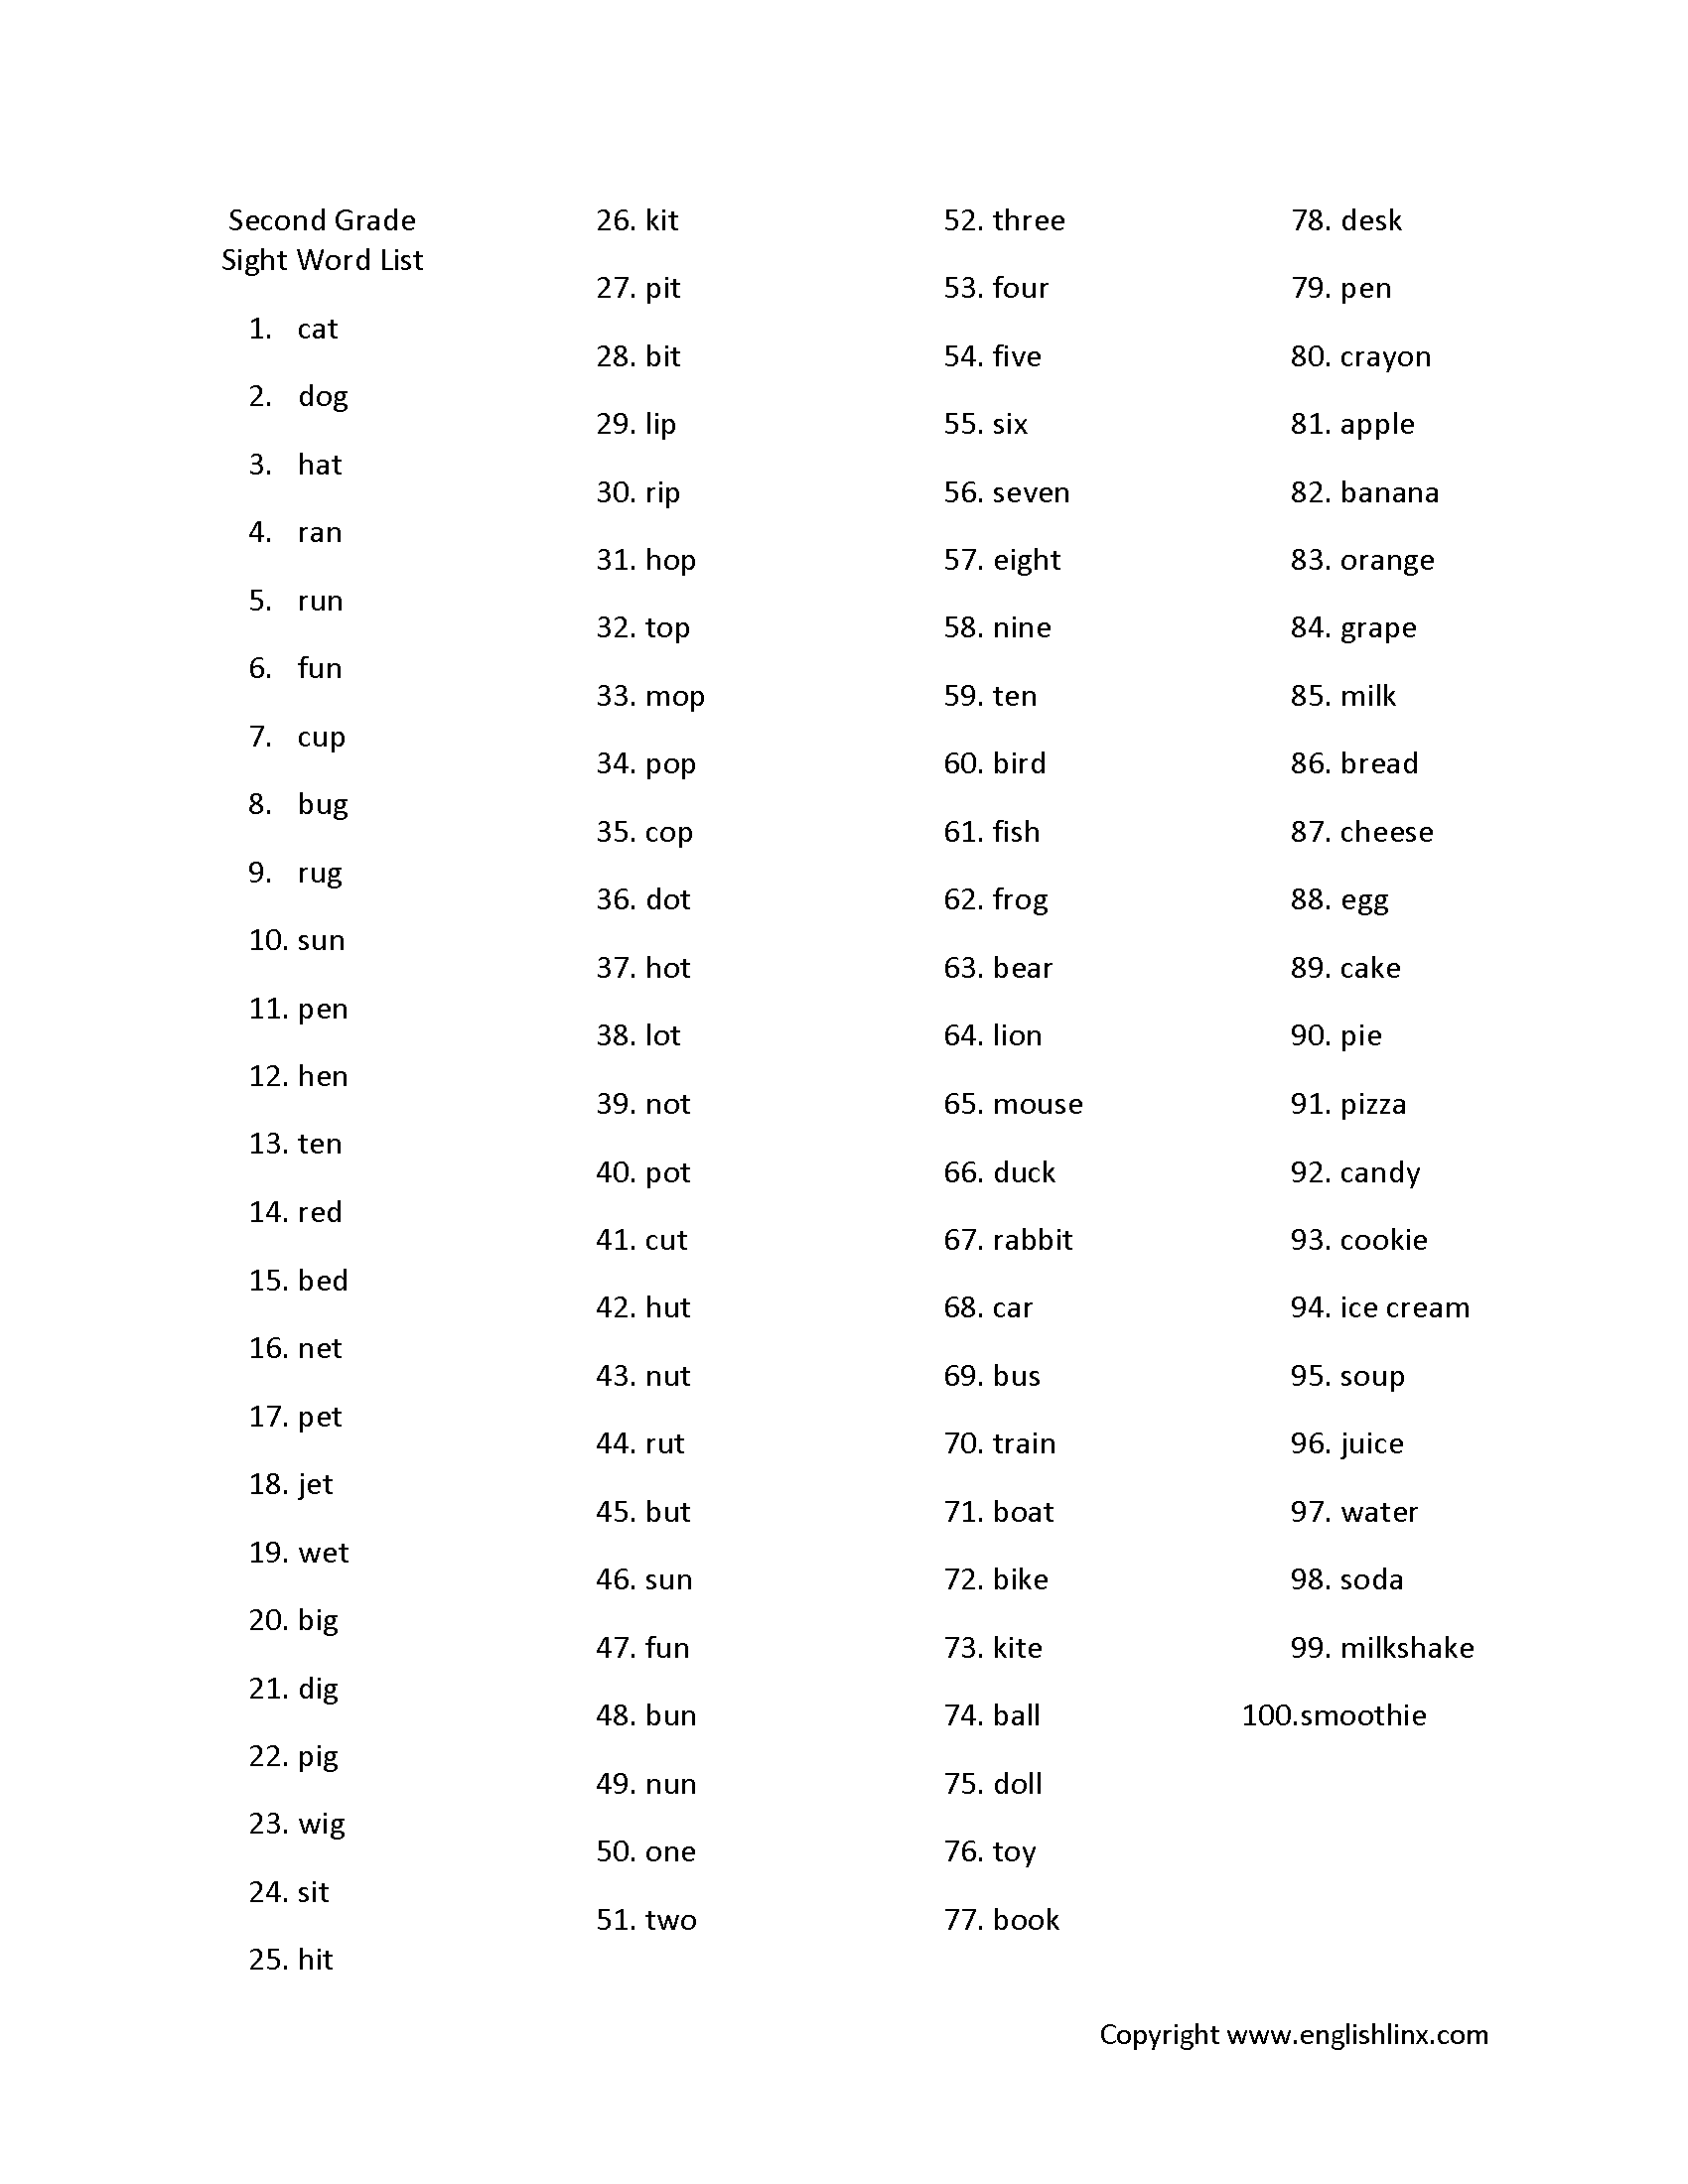 Second Grade Spelling Words List Worksheets